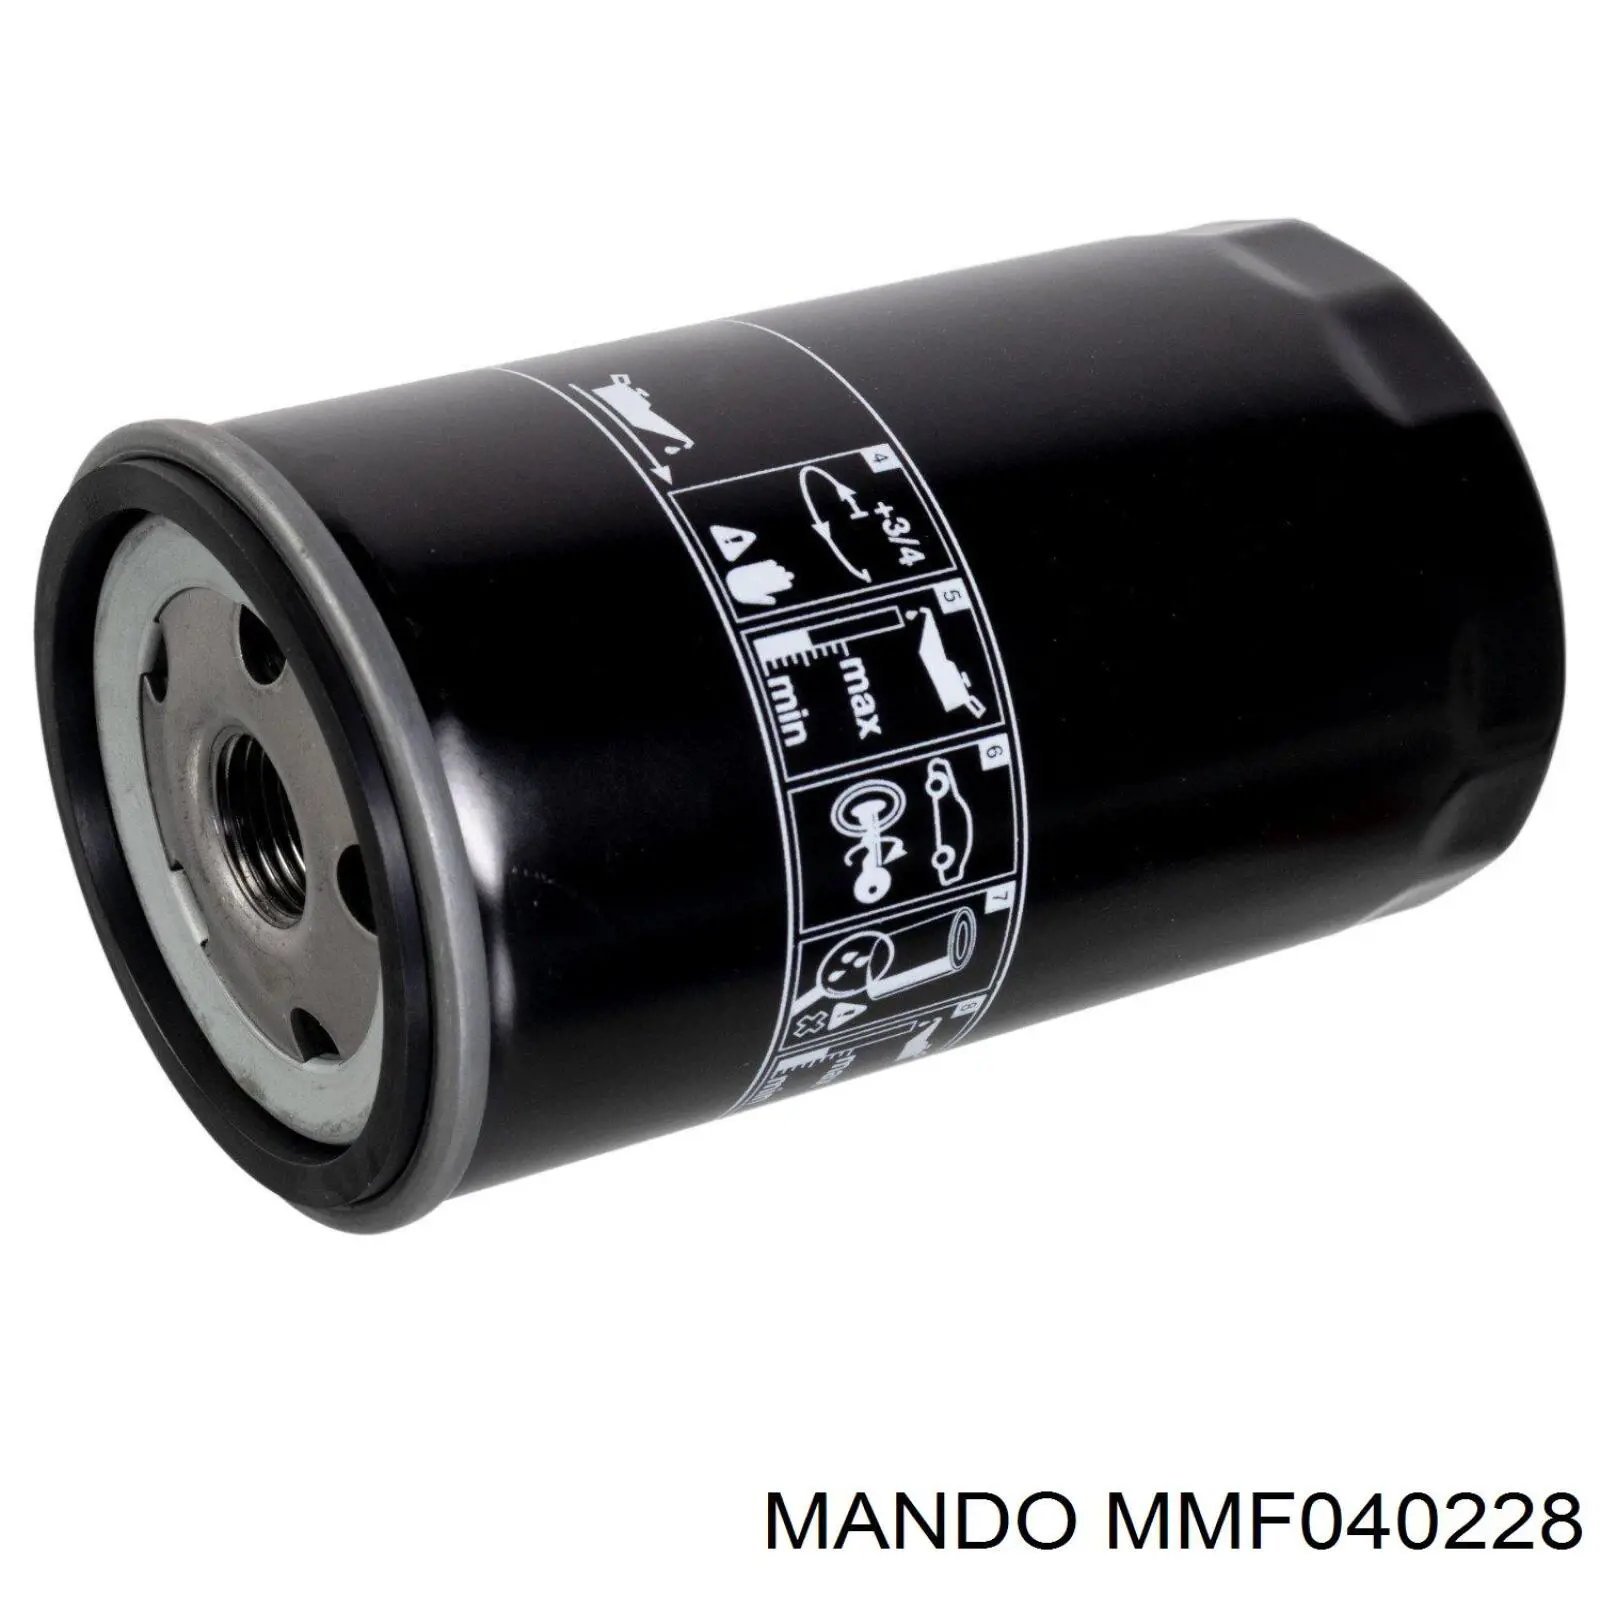 MMF040228 Mando масляный фильтр